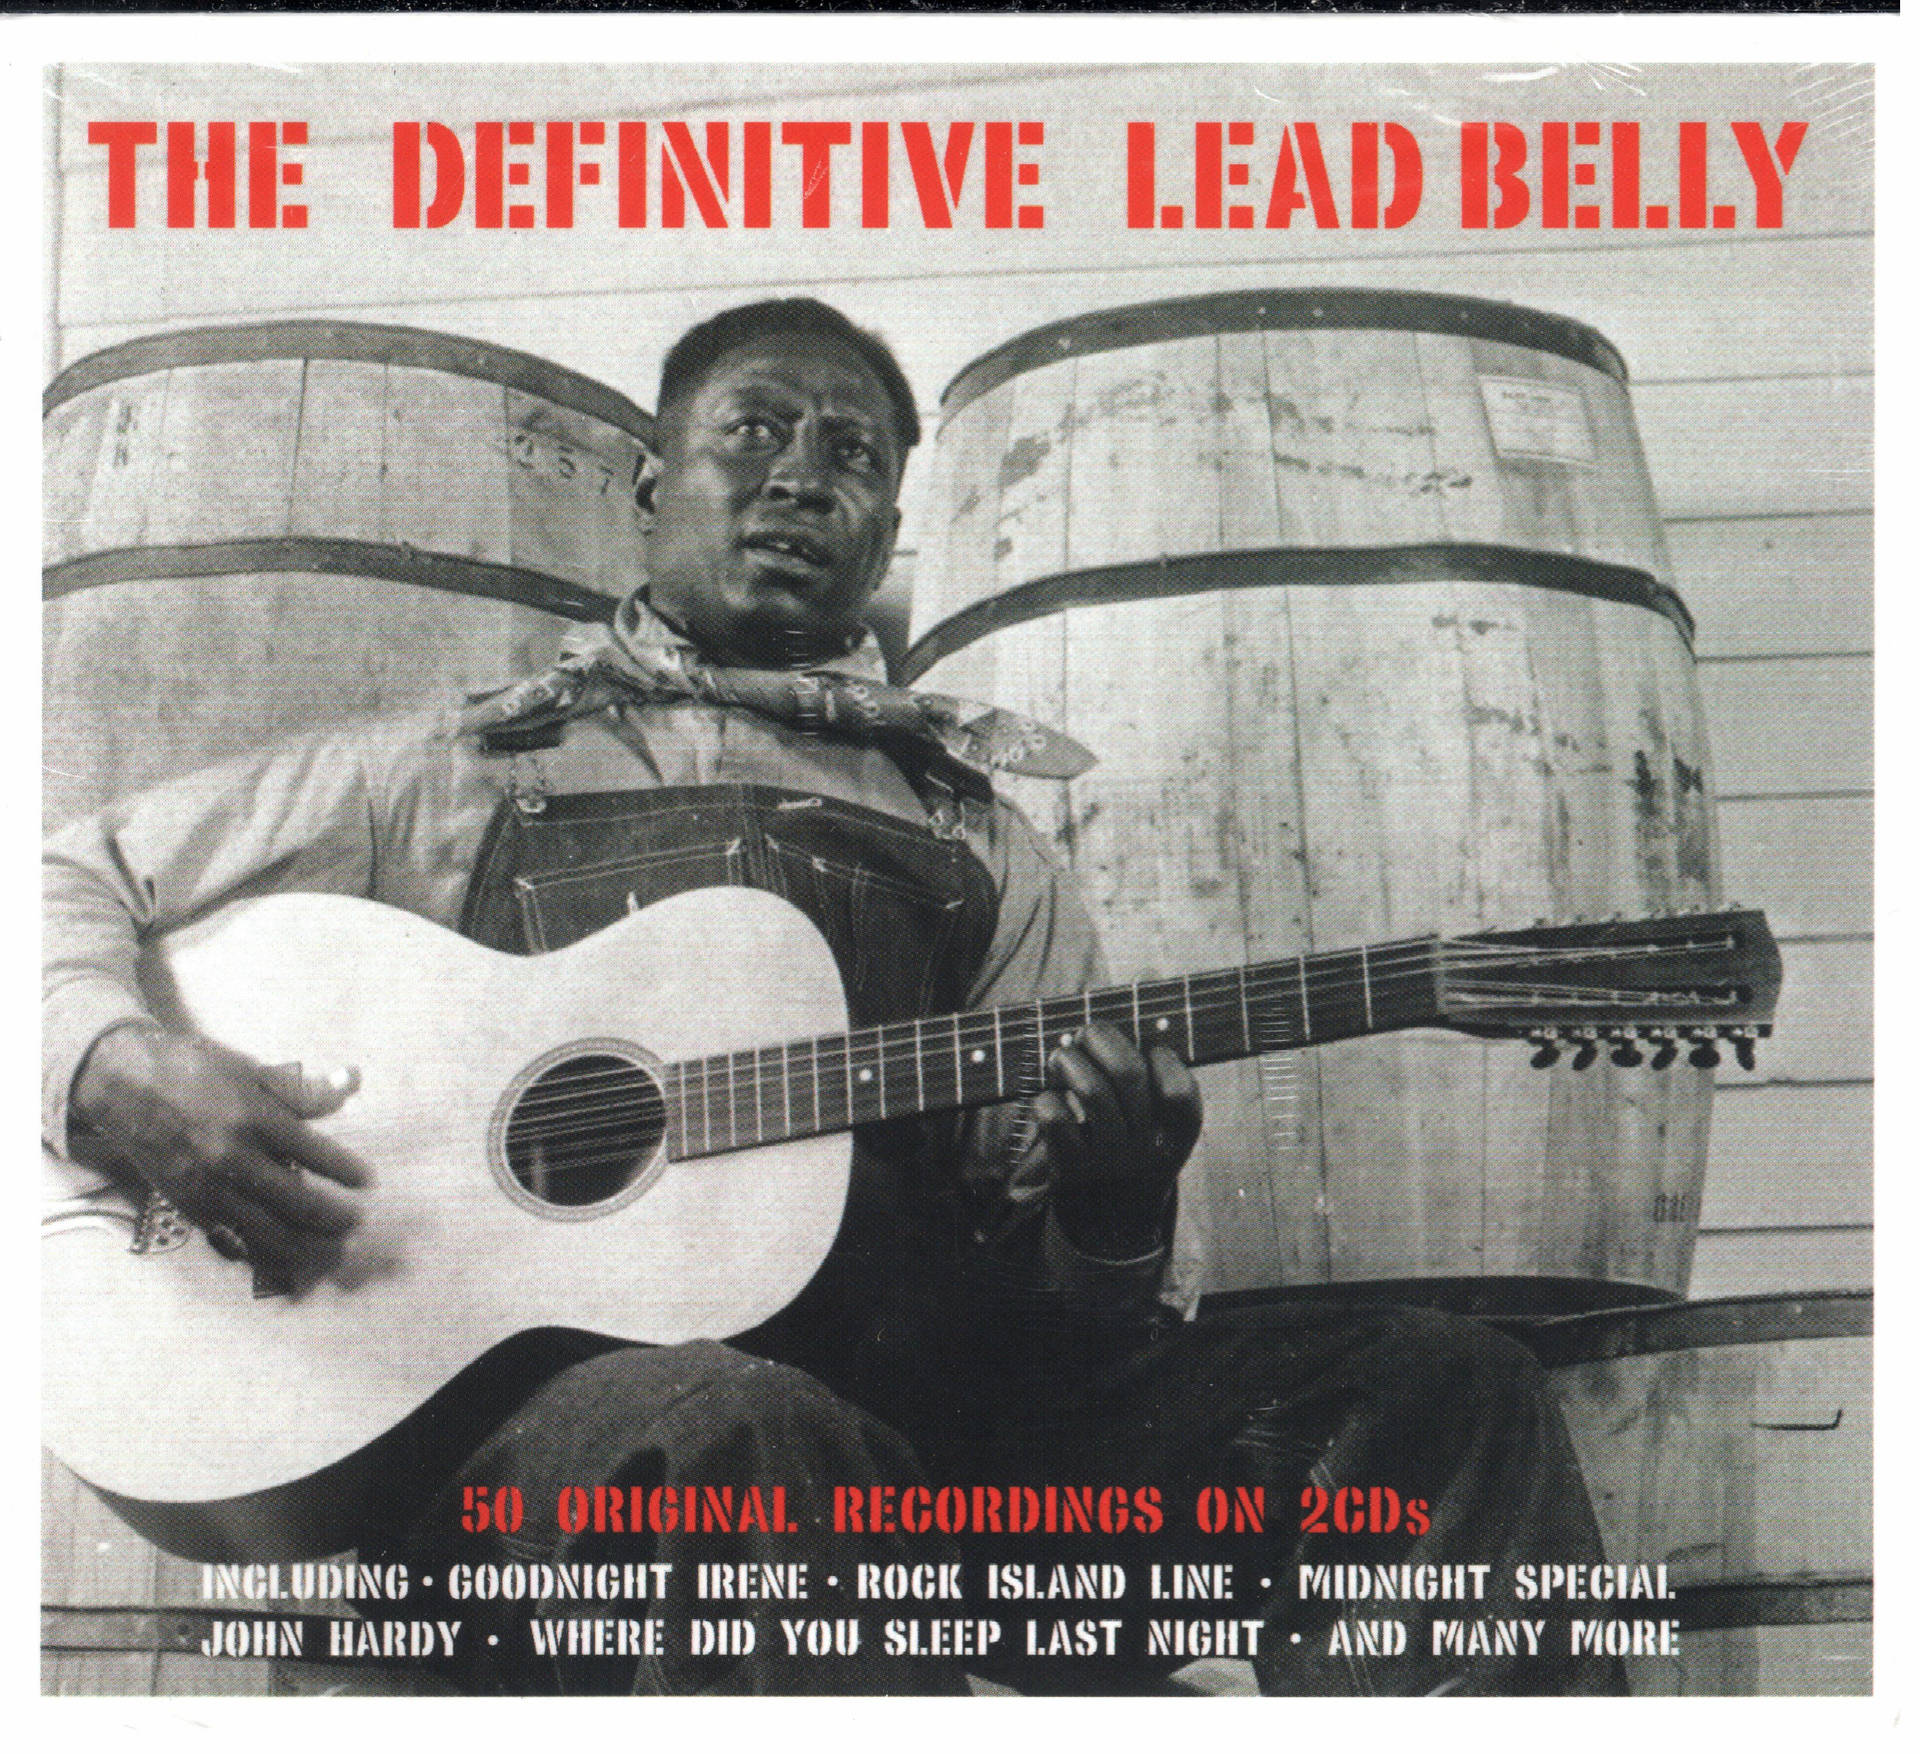 American Singer Musician Leadbelly The Definitive Album Cover Wallpaper